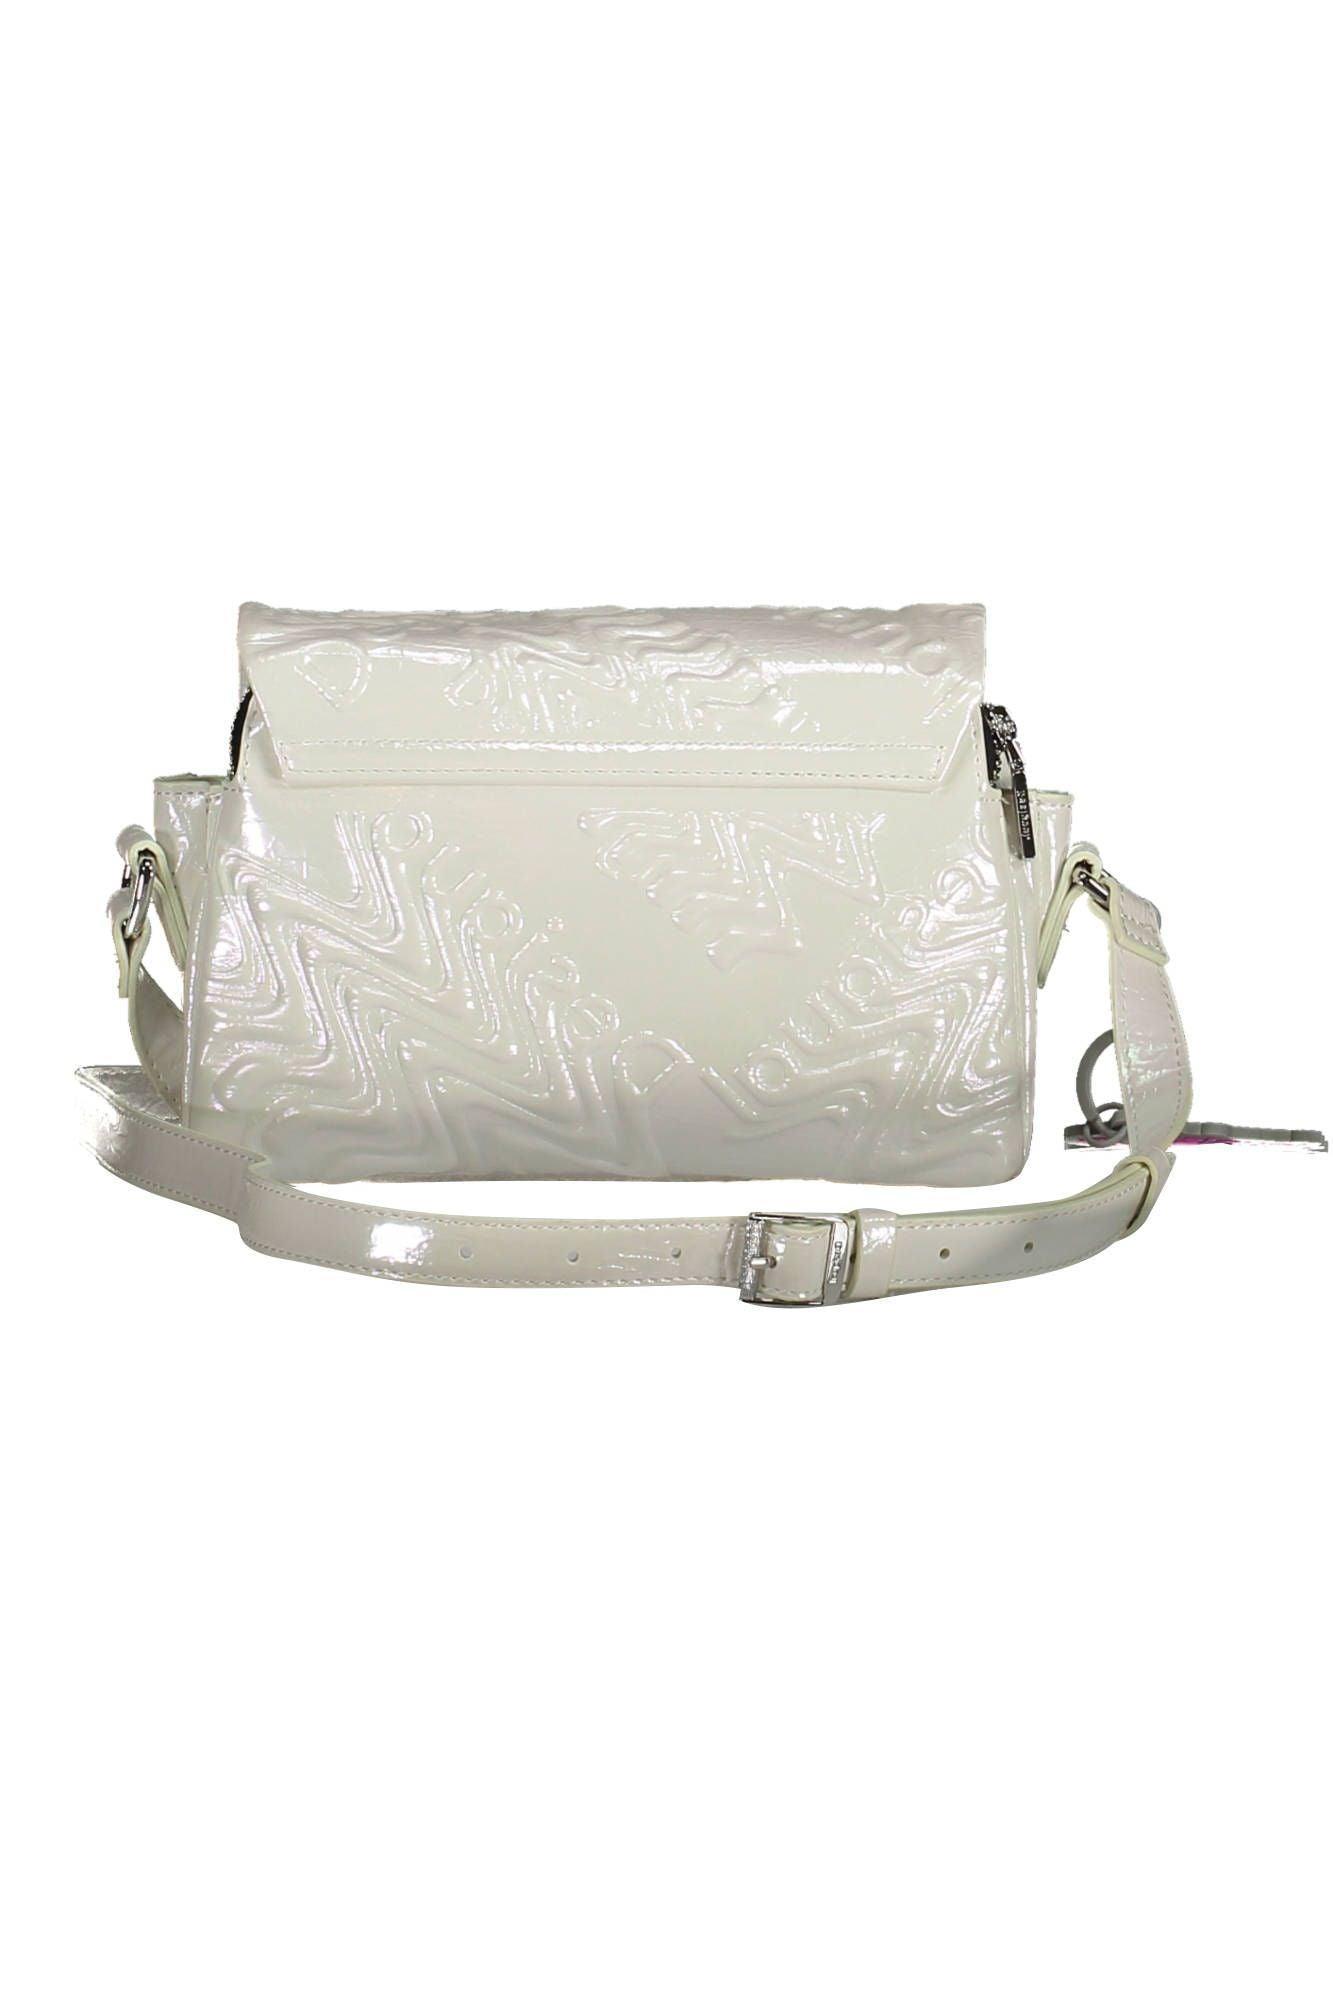 Desigual Iridescent Adjustable Shoulder Bag in White - PER.FASHION